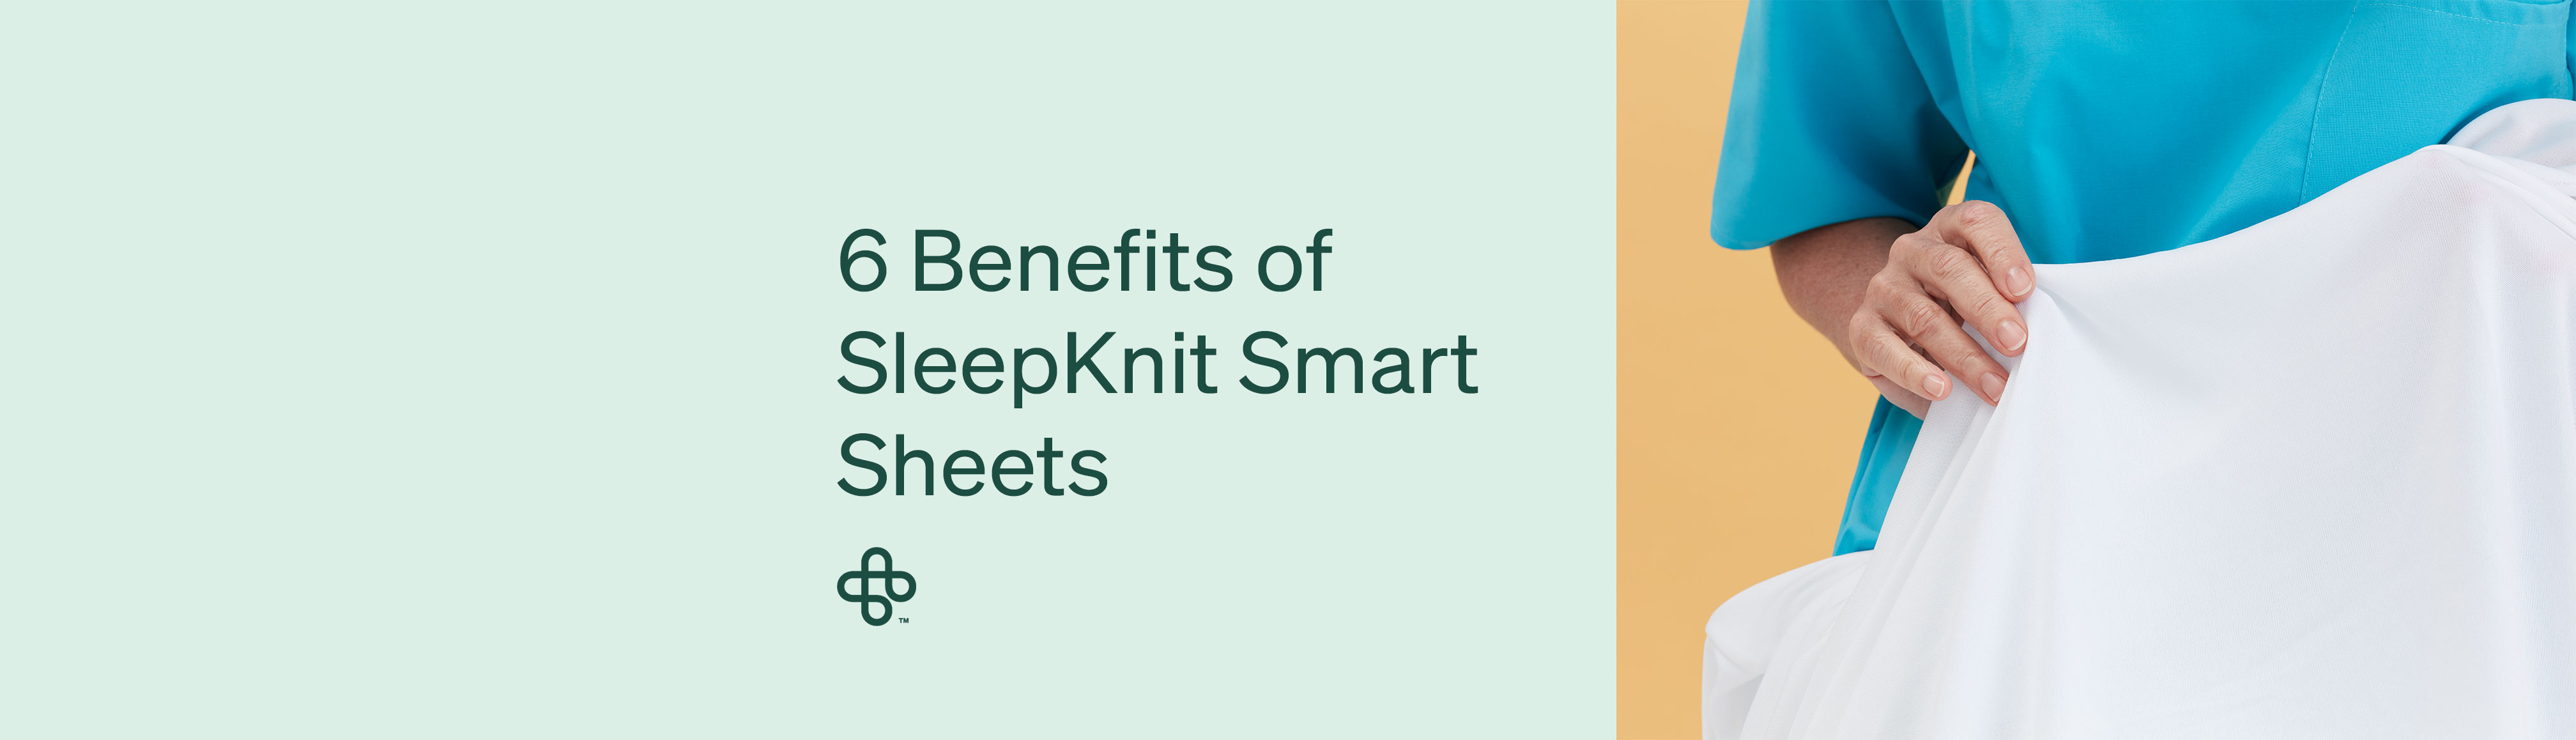 6 Benefits of SleepKnit Smart Sheets